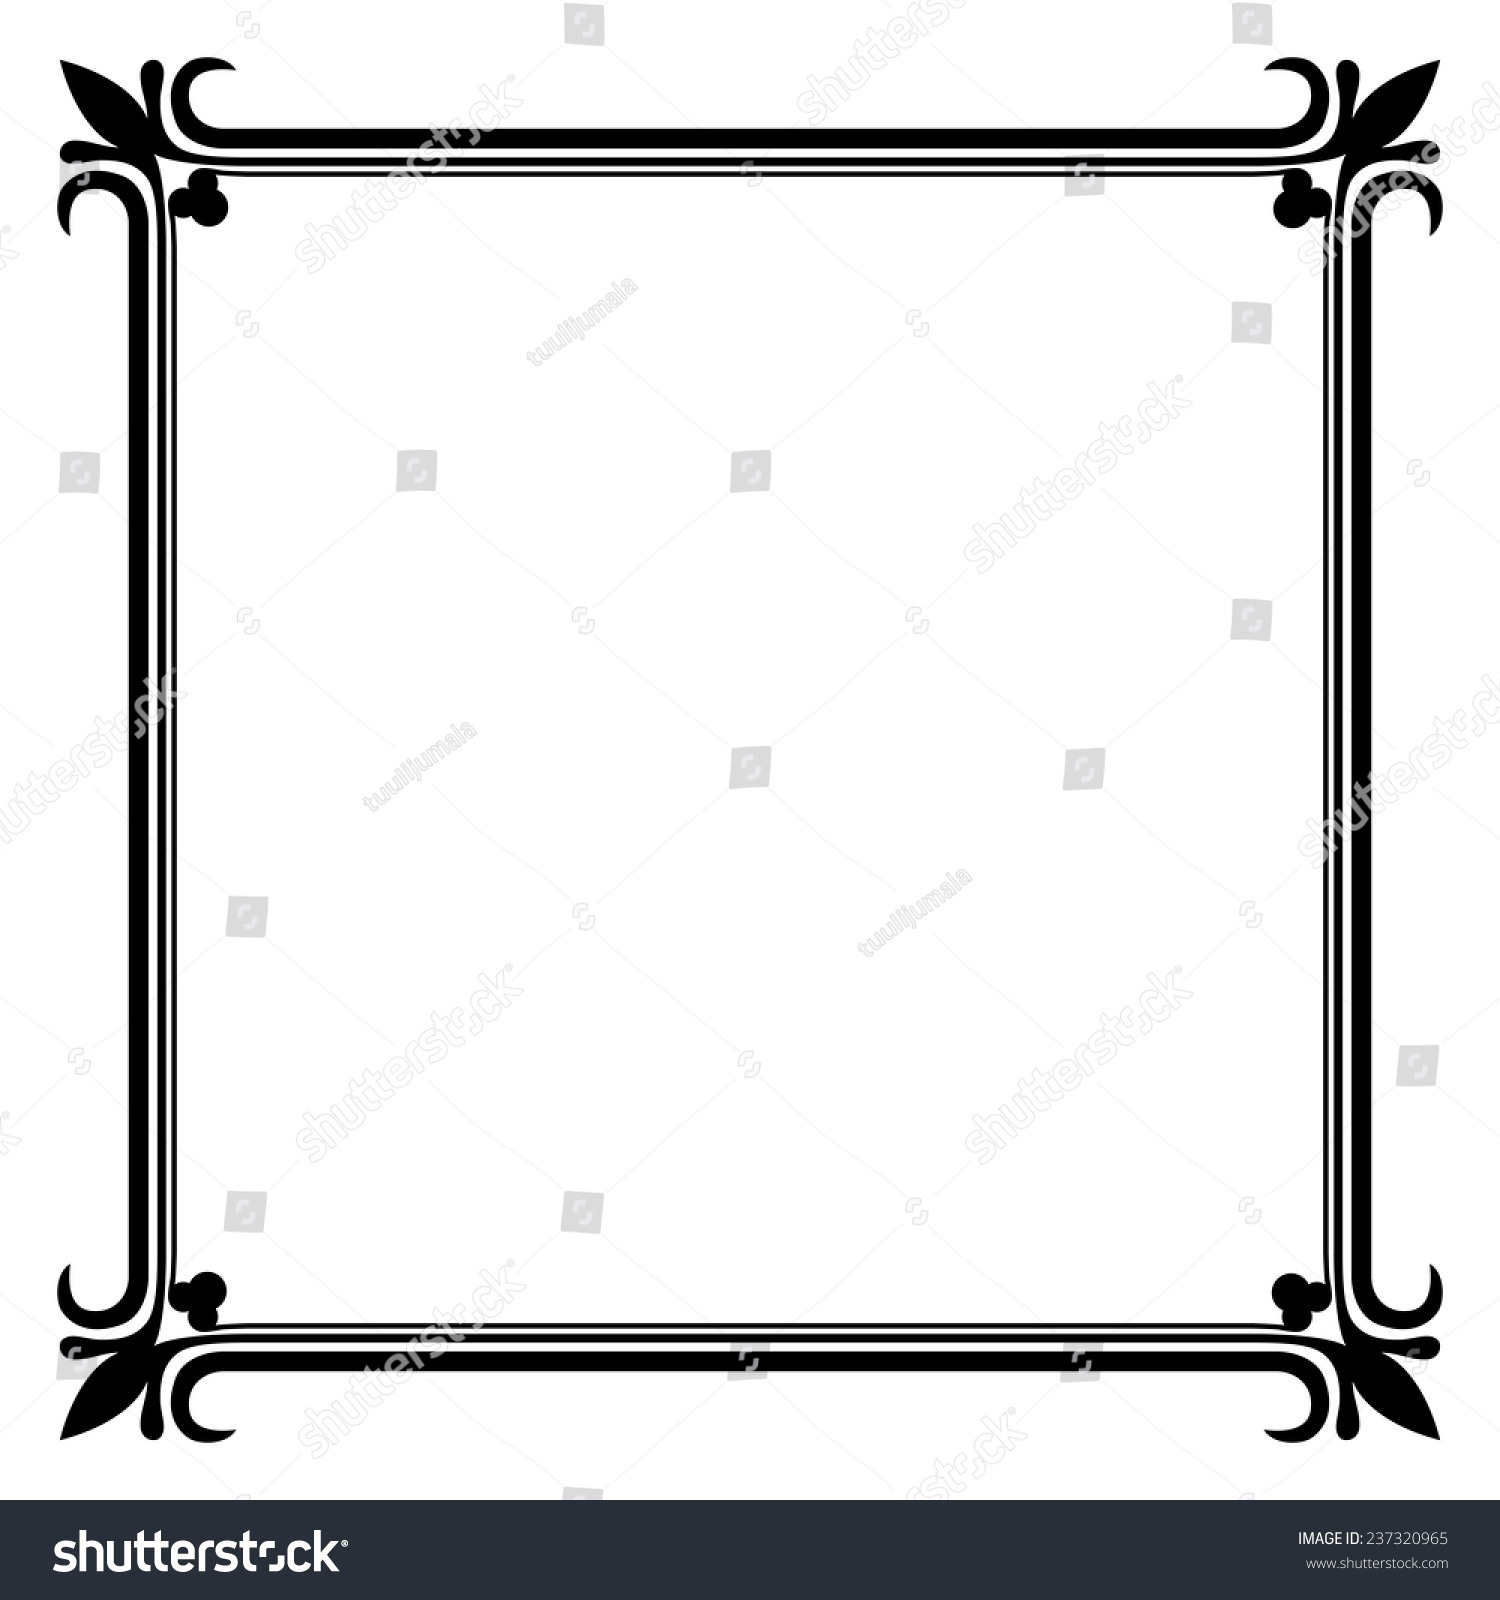 Black And White Vintage Frame Vector Template. - 237320965 : Shutterstock